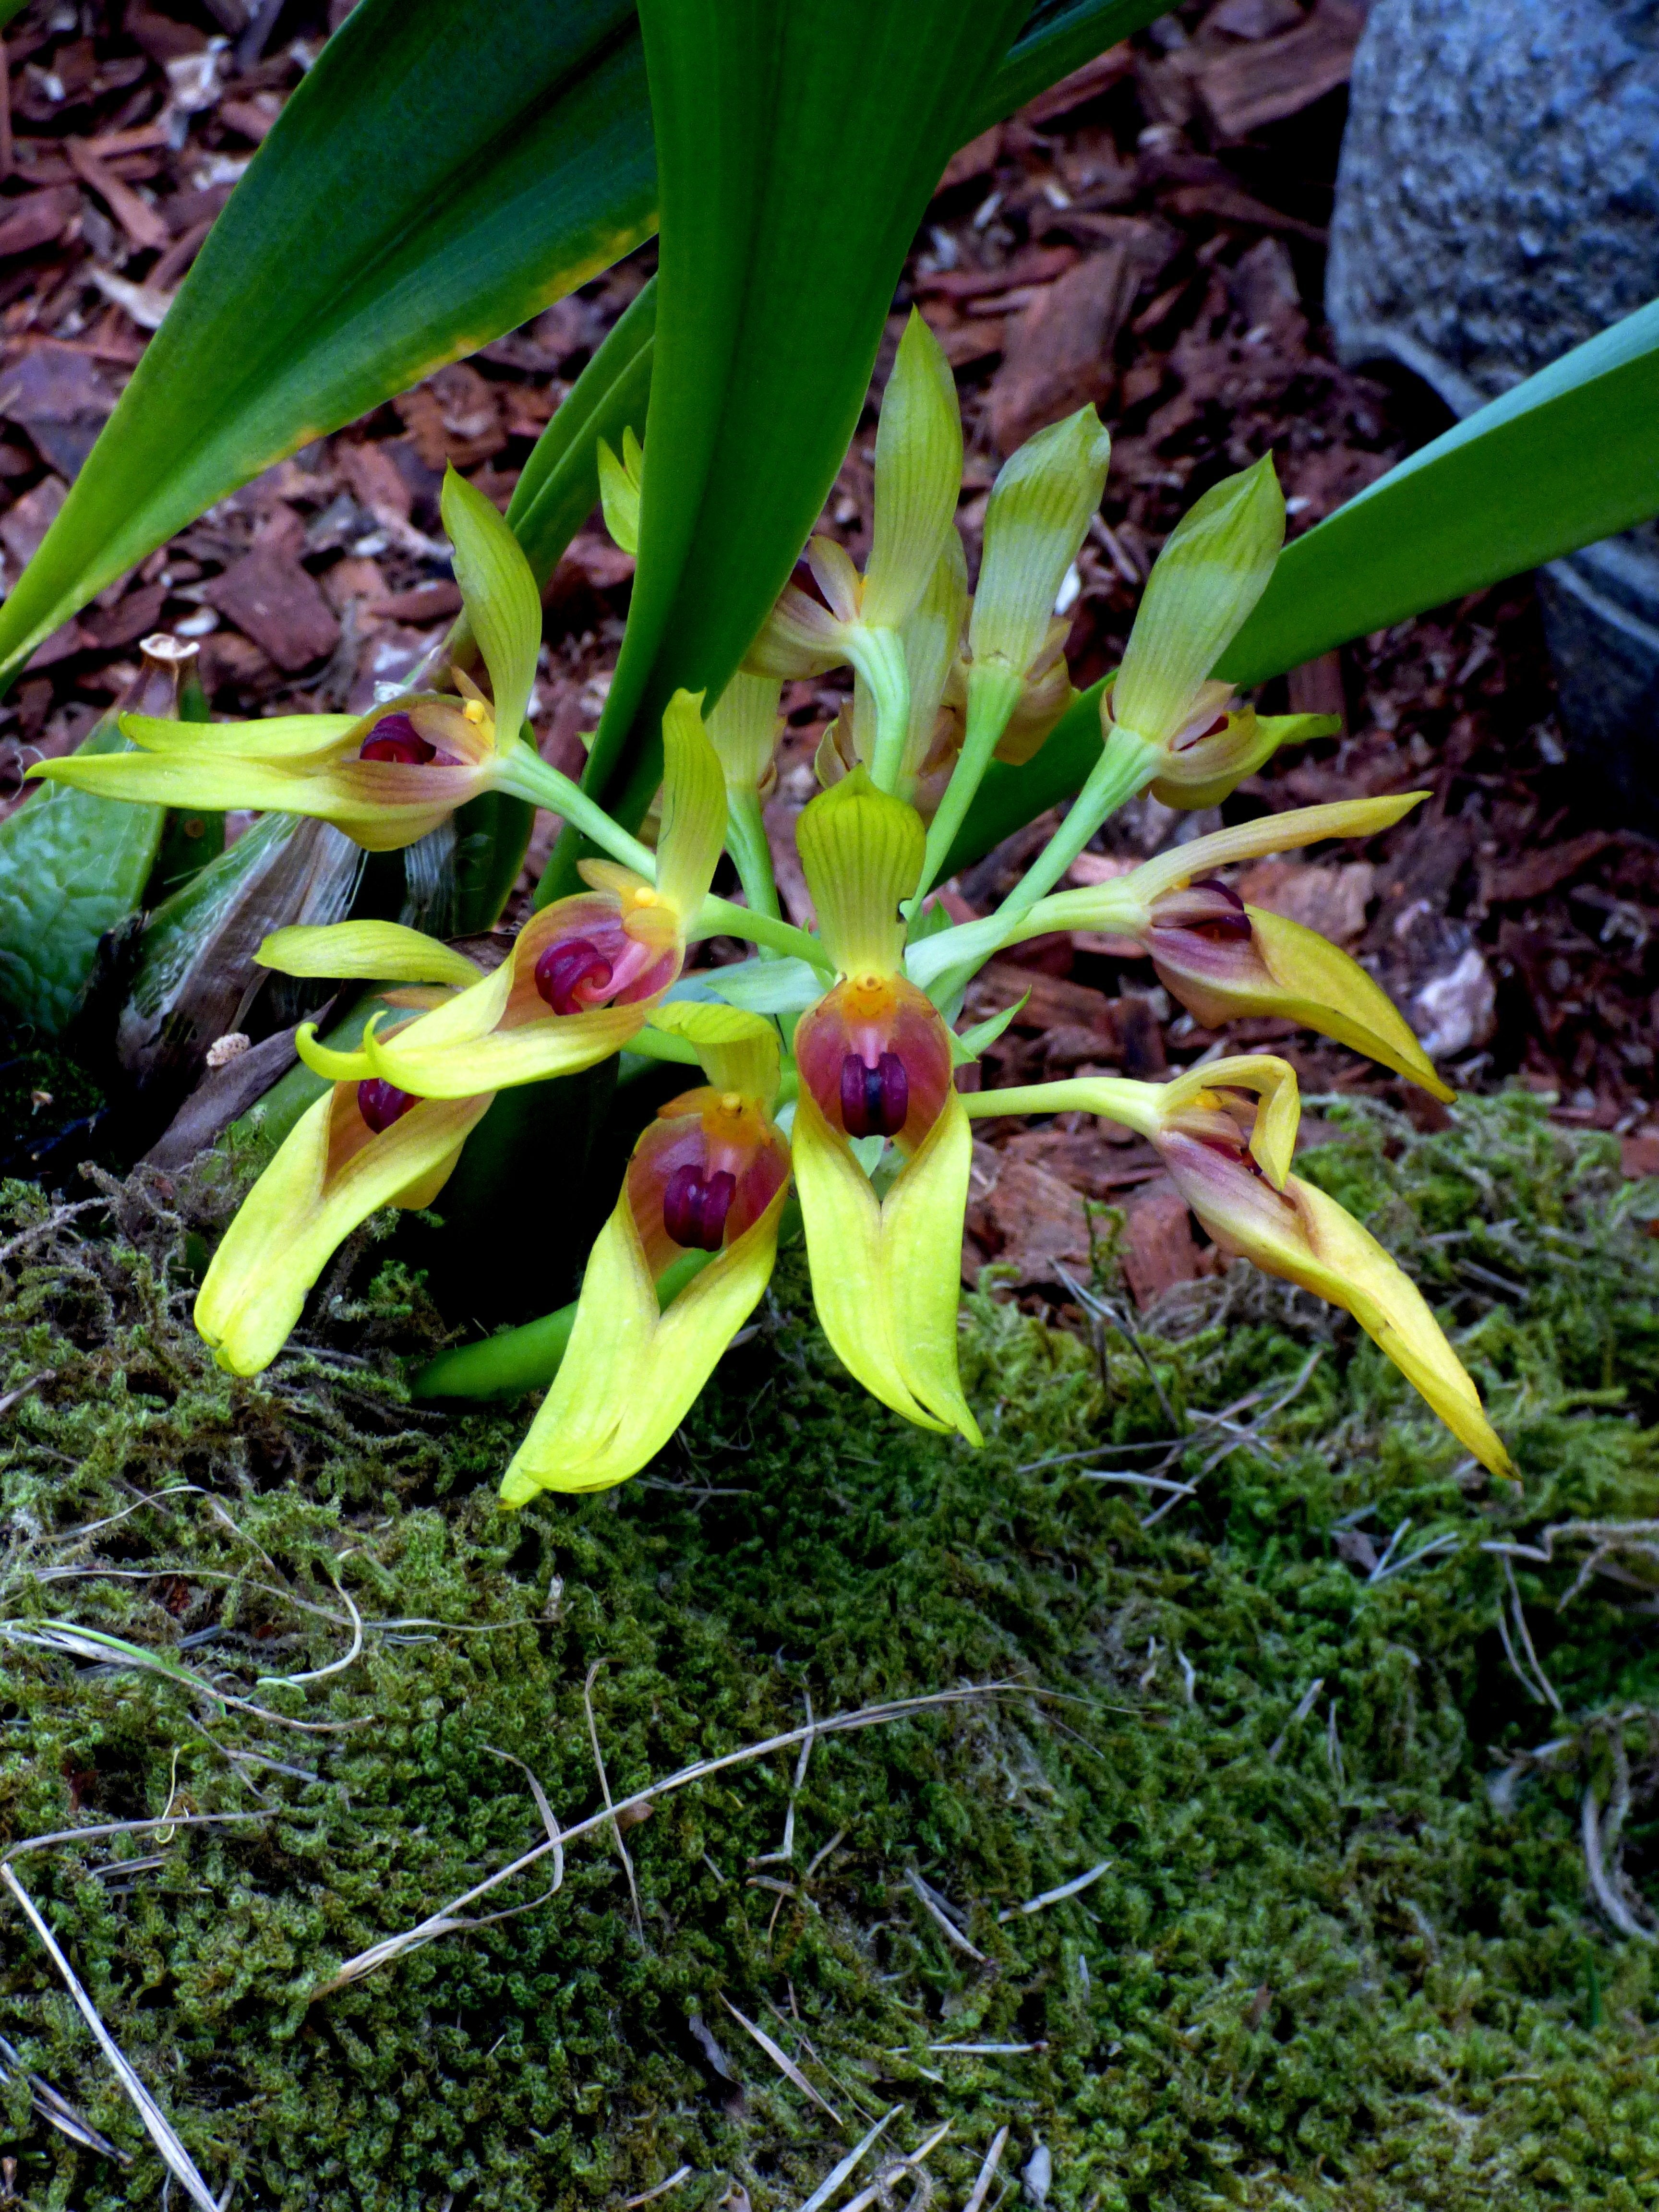 Bulbophyllum graveolens "Big"